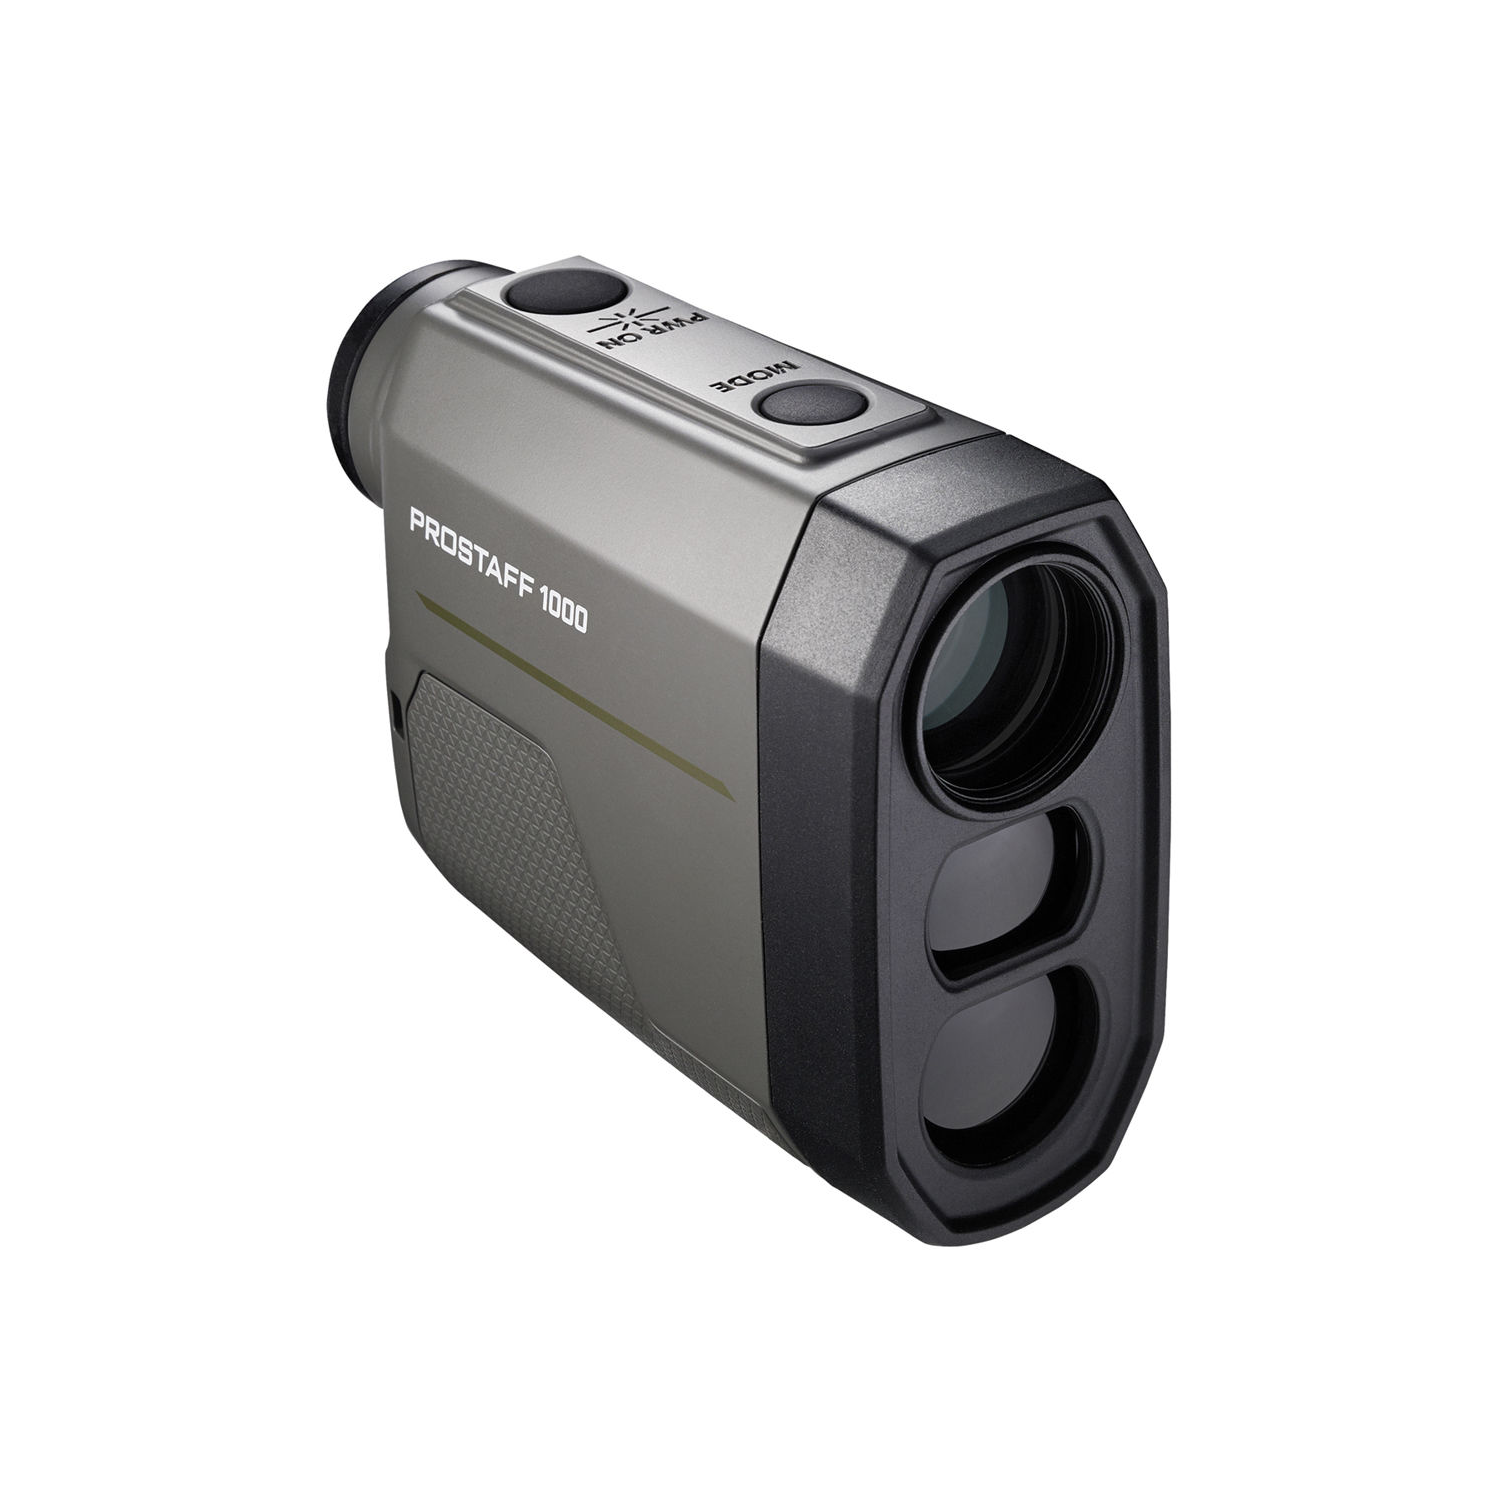 Nikon Prostaff 1000 Golf Rangefinder - 6x20